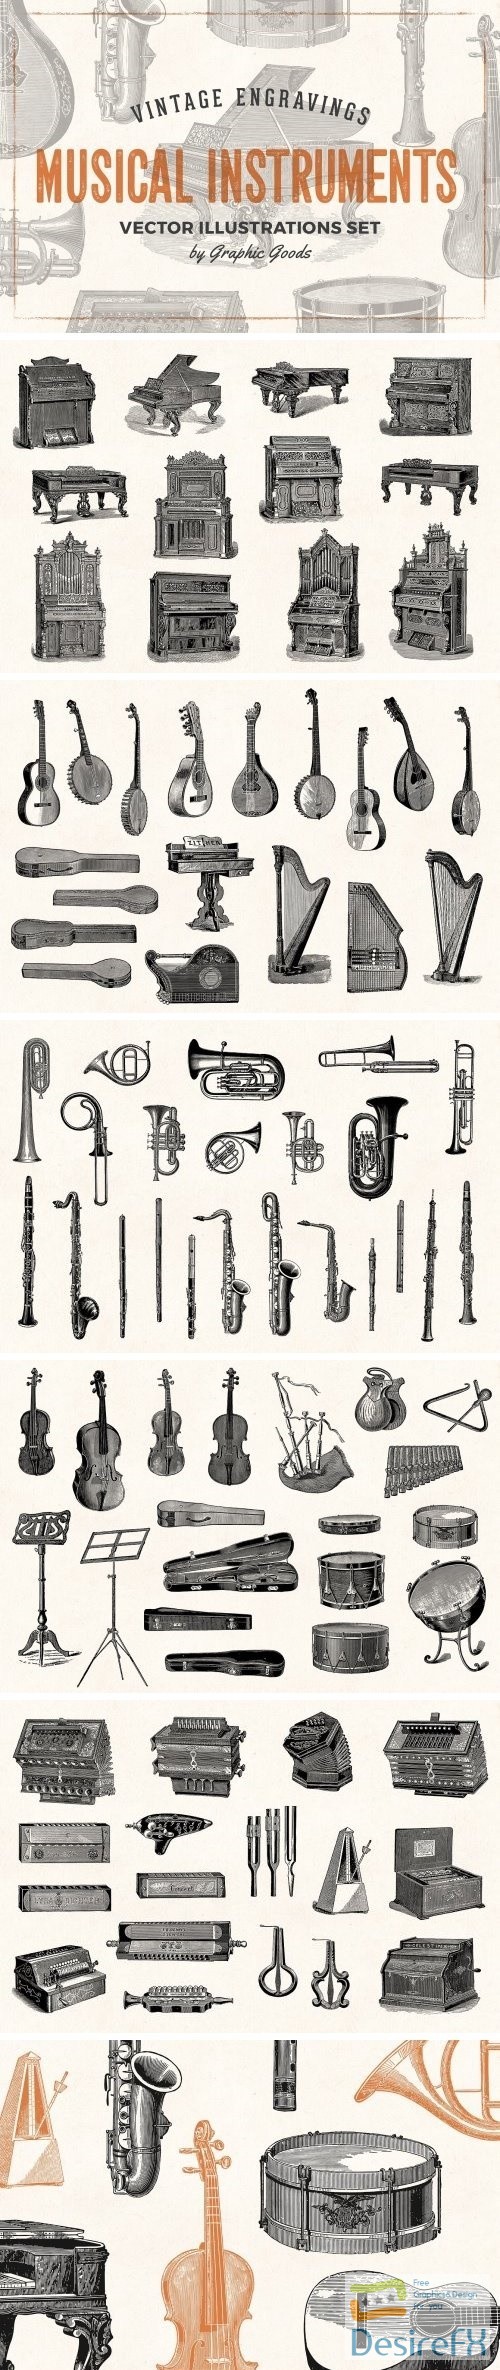 Musical Instruments Engravings Set 1900180